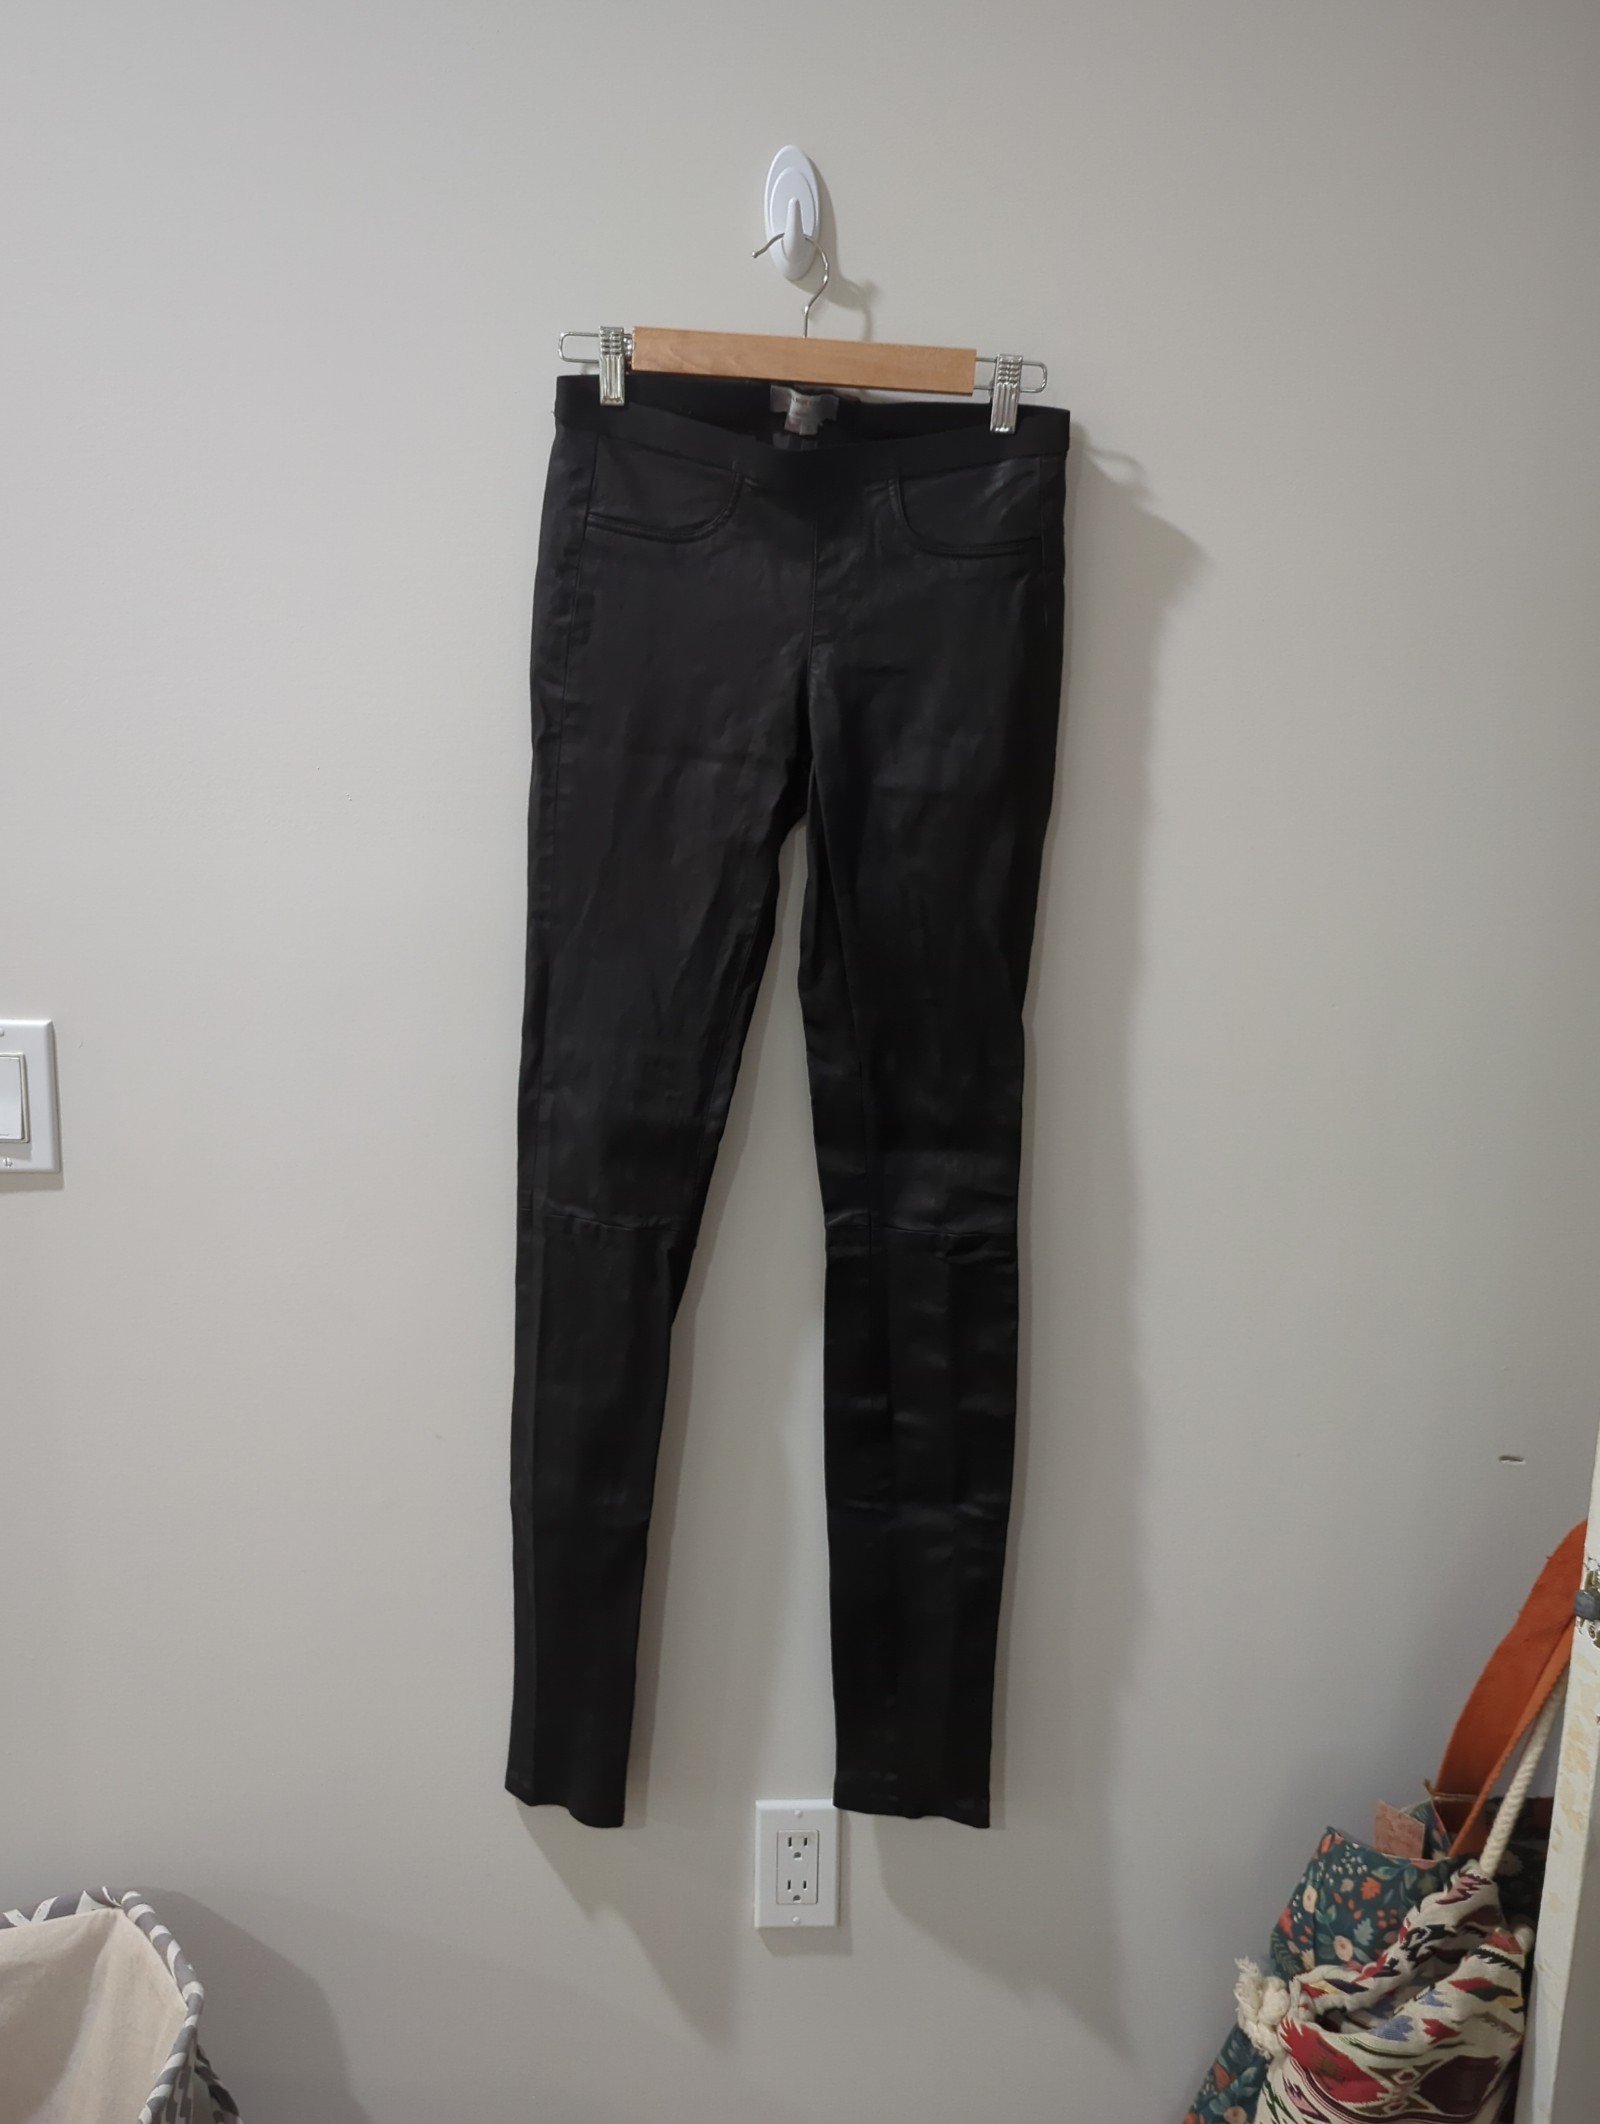 Cheap Helmut Lang Black 100% Leather Leggings Pants LTSbxD6wt Cool